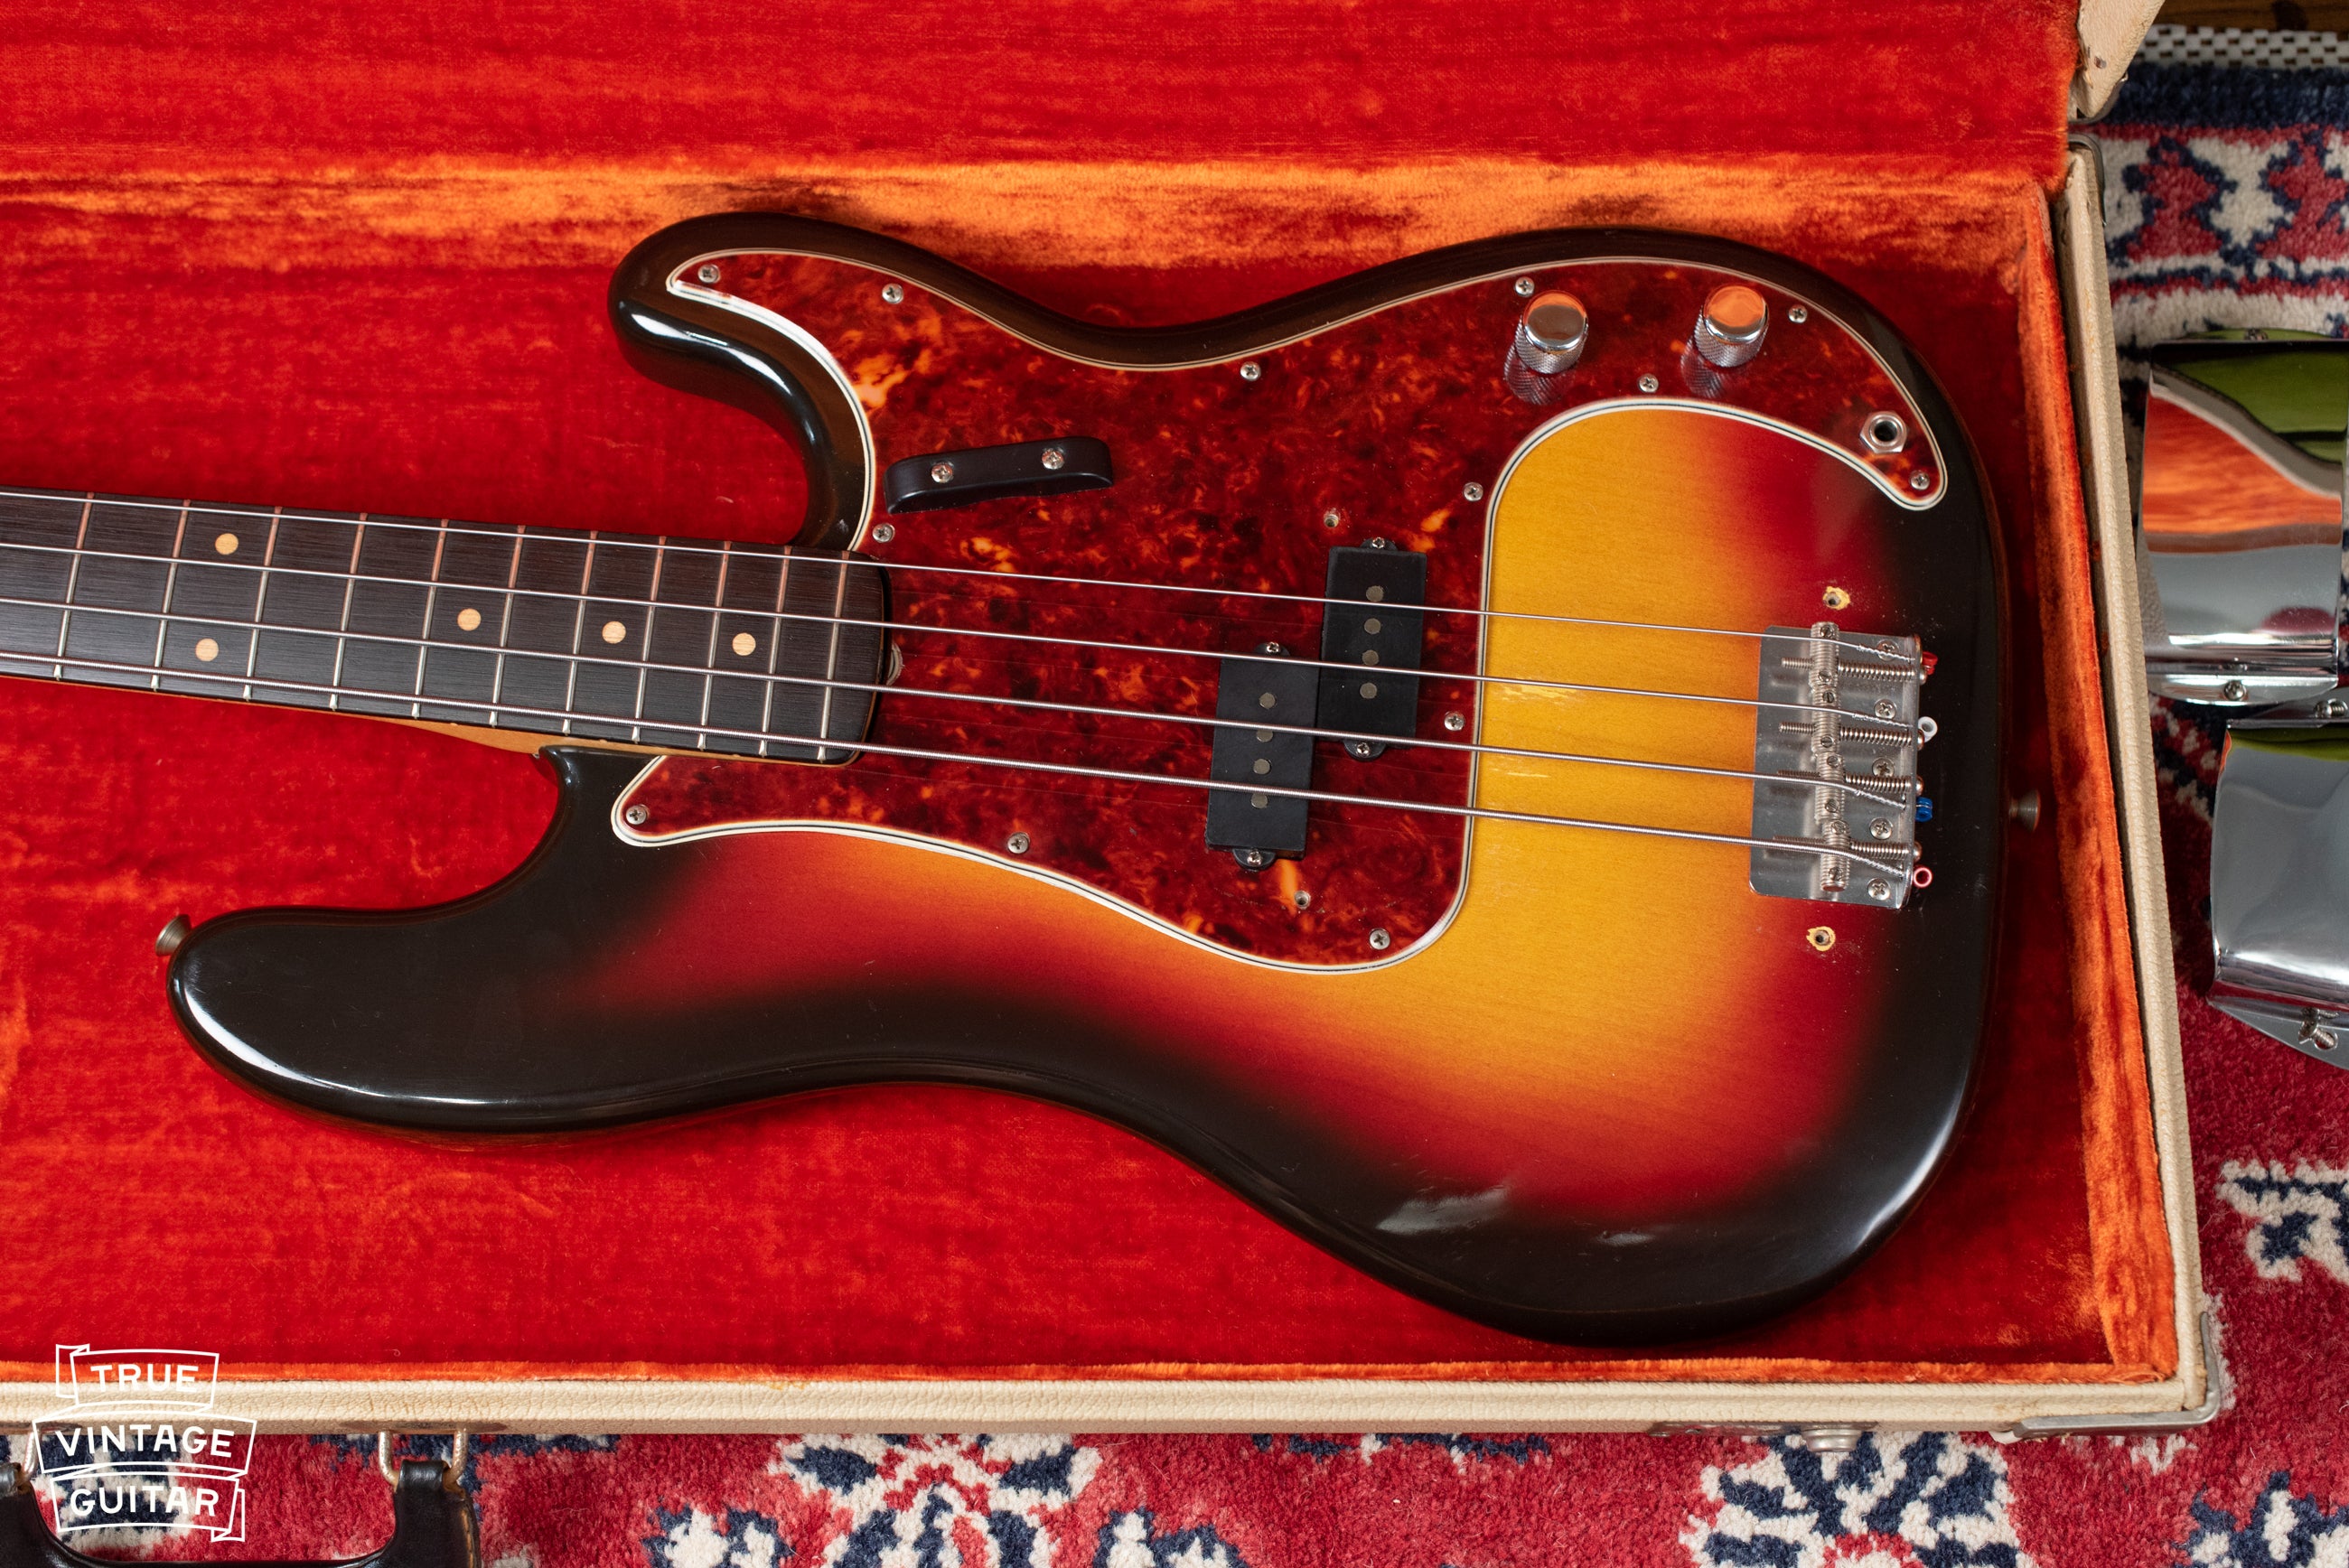 Vintage 1963 Fender Precision Bass guitar